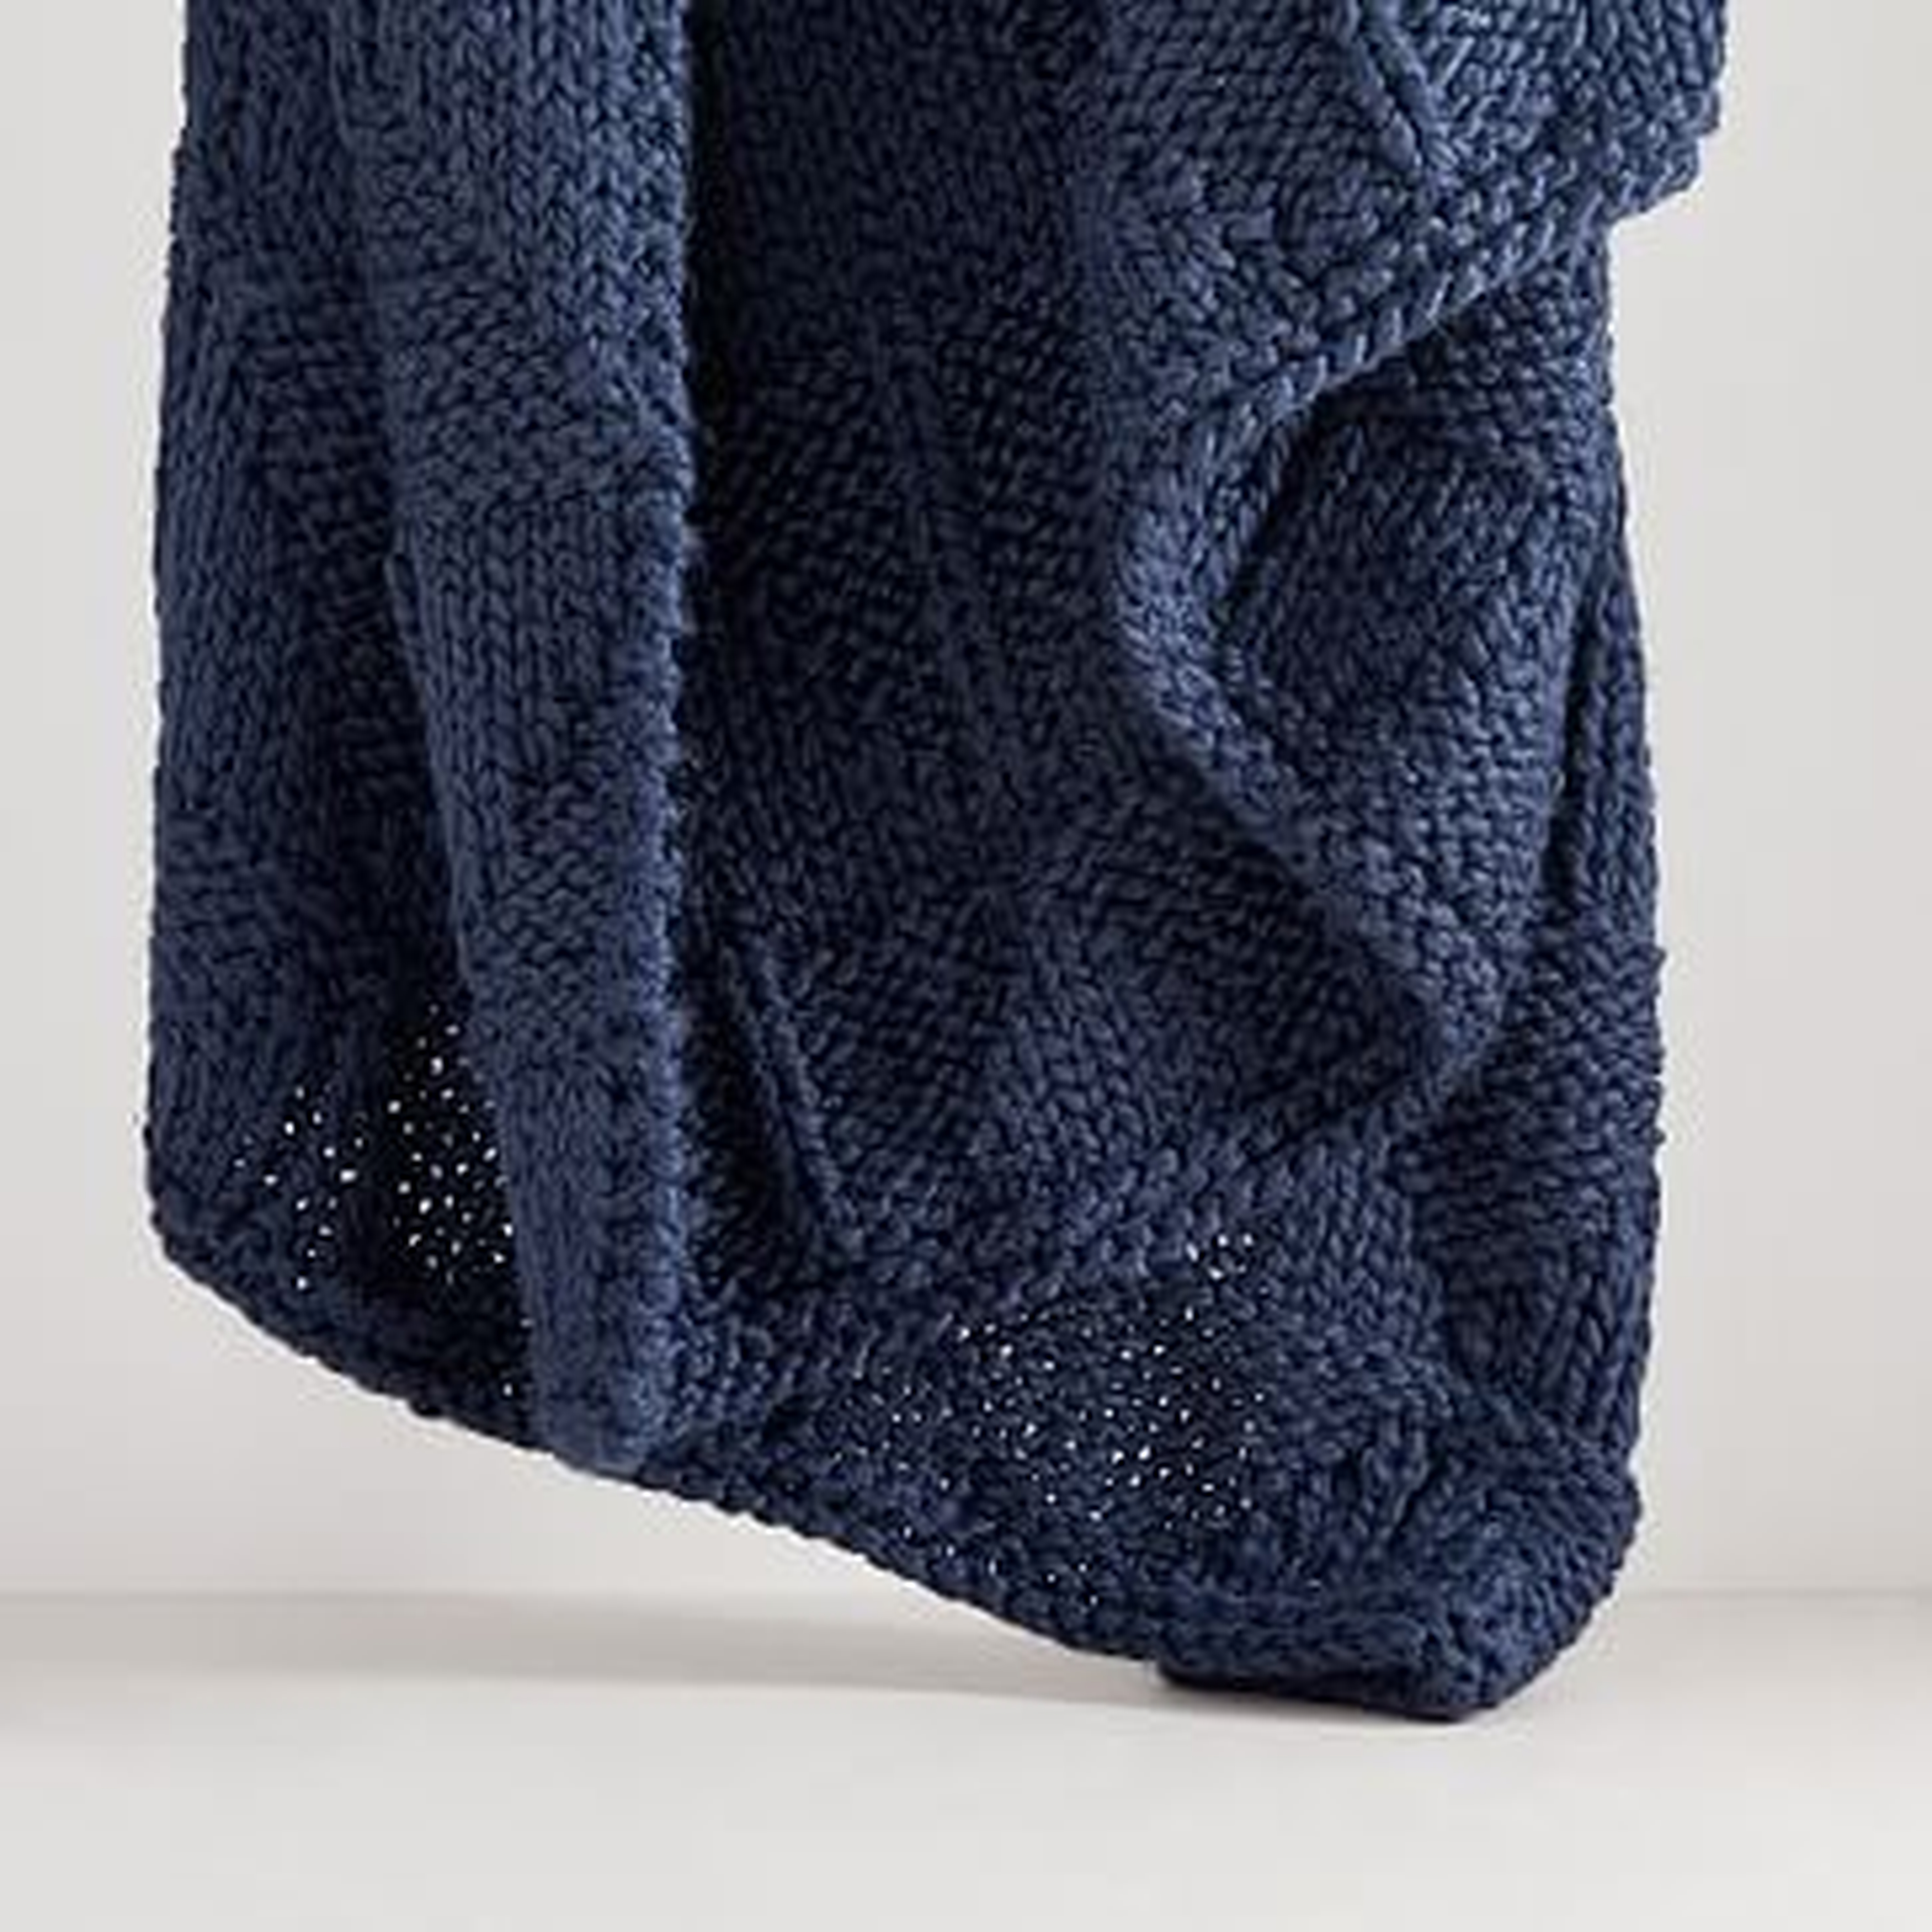 Fisherman Knit Throw, 50"x60", Midnight - West Elm